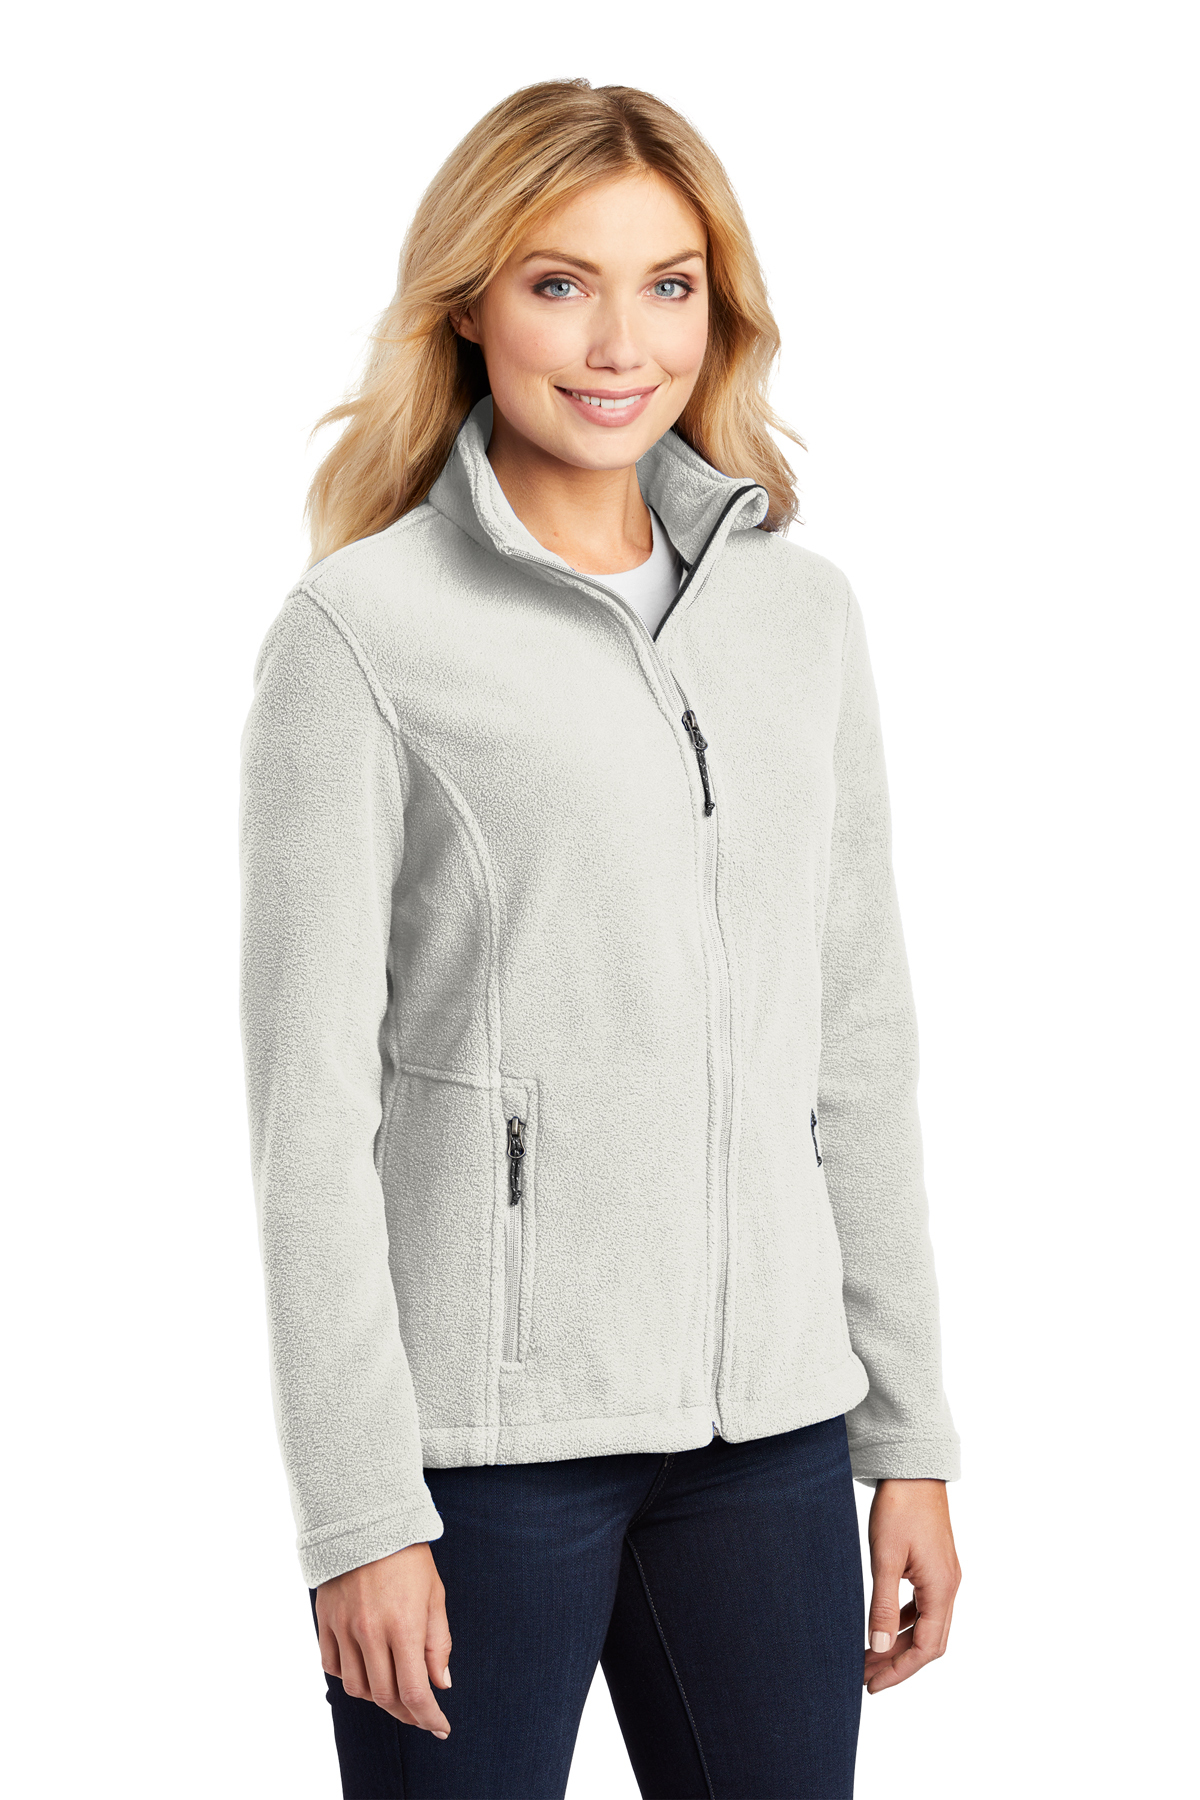 Port Authority Ladies Value Fleece Jacket | Product | SanMar